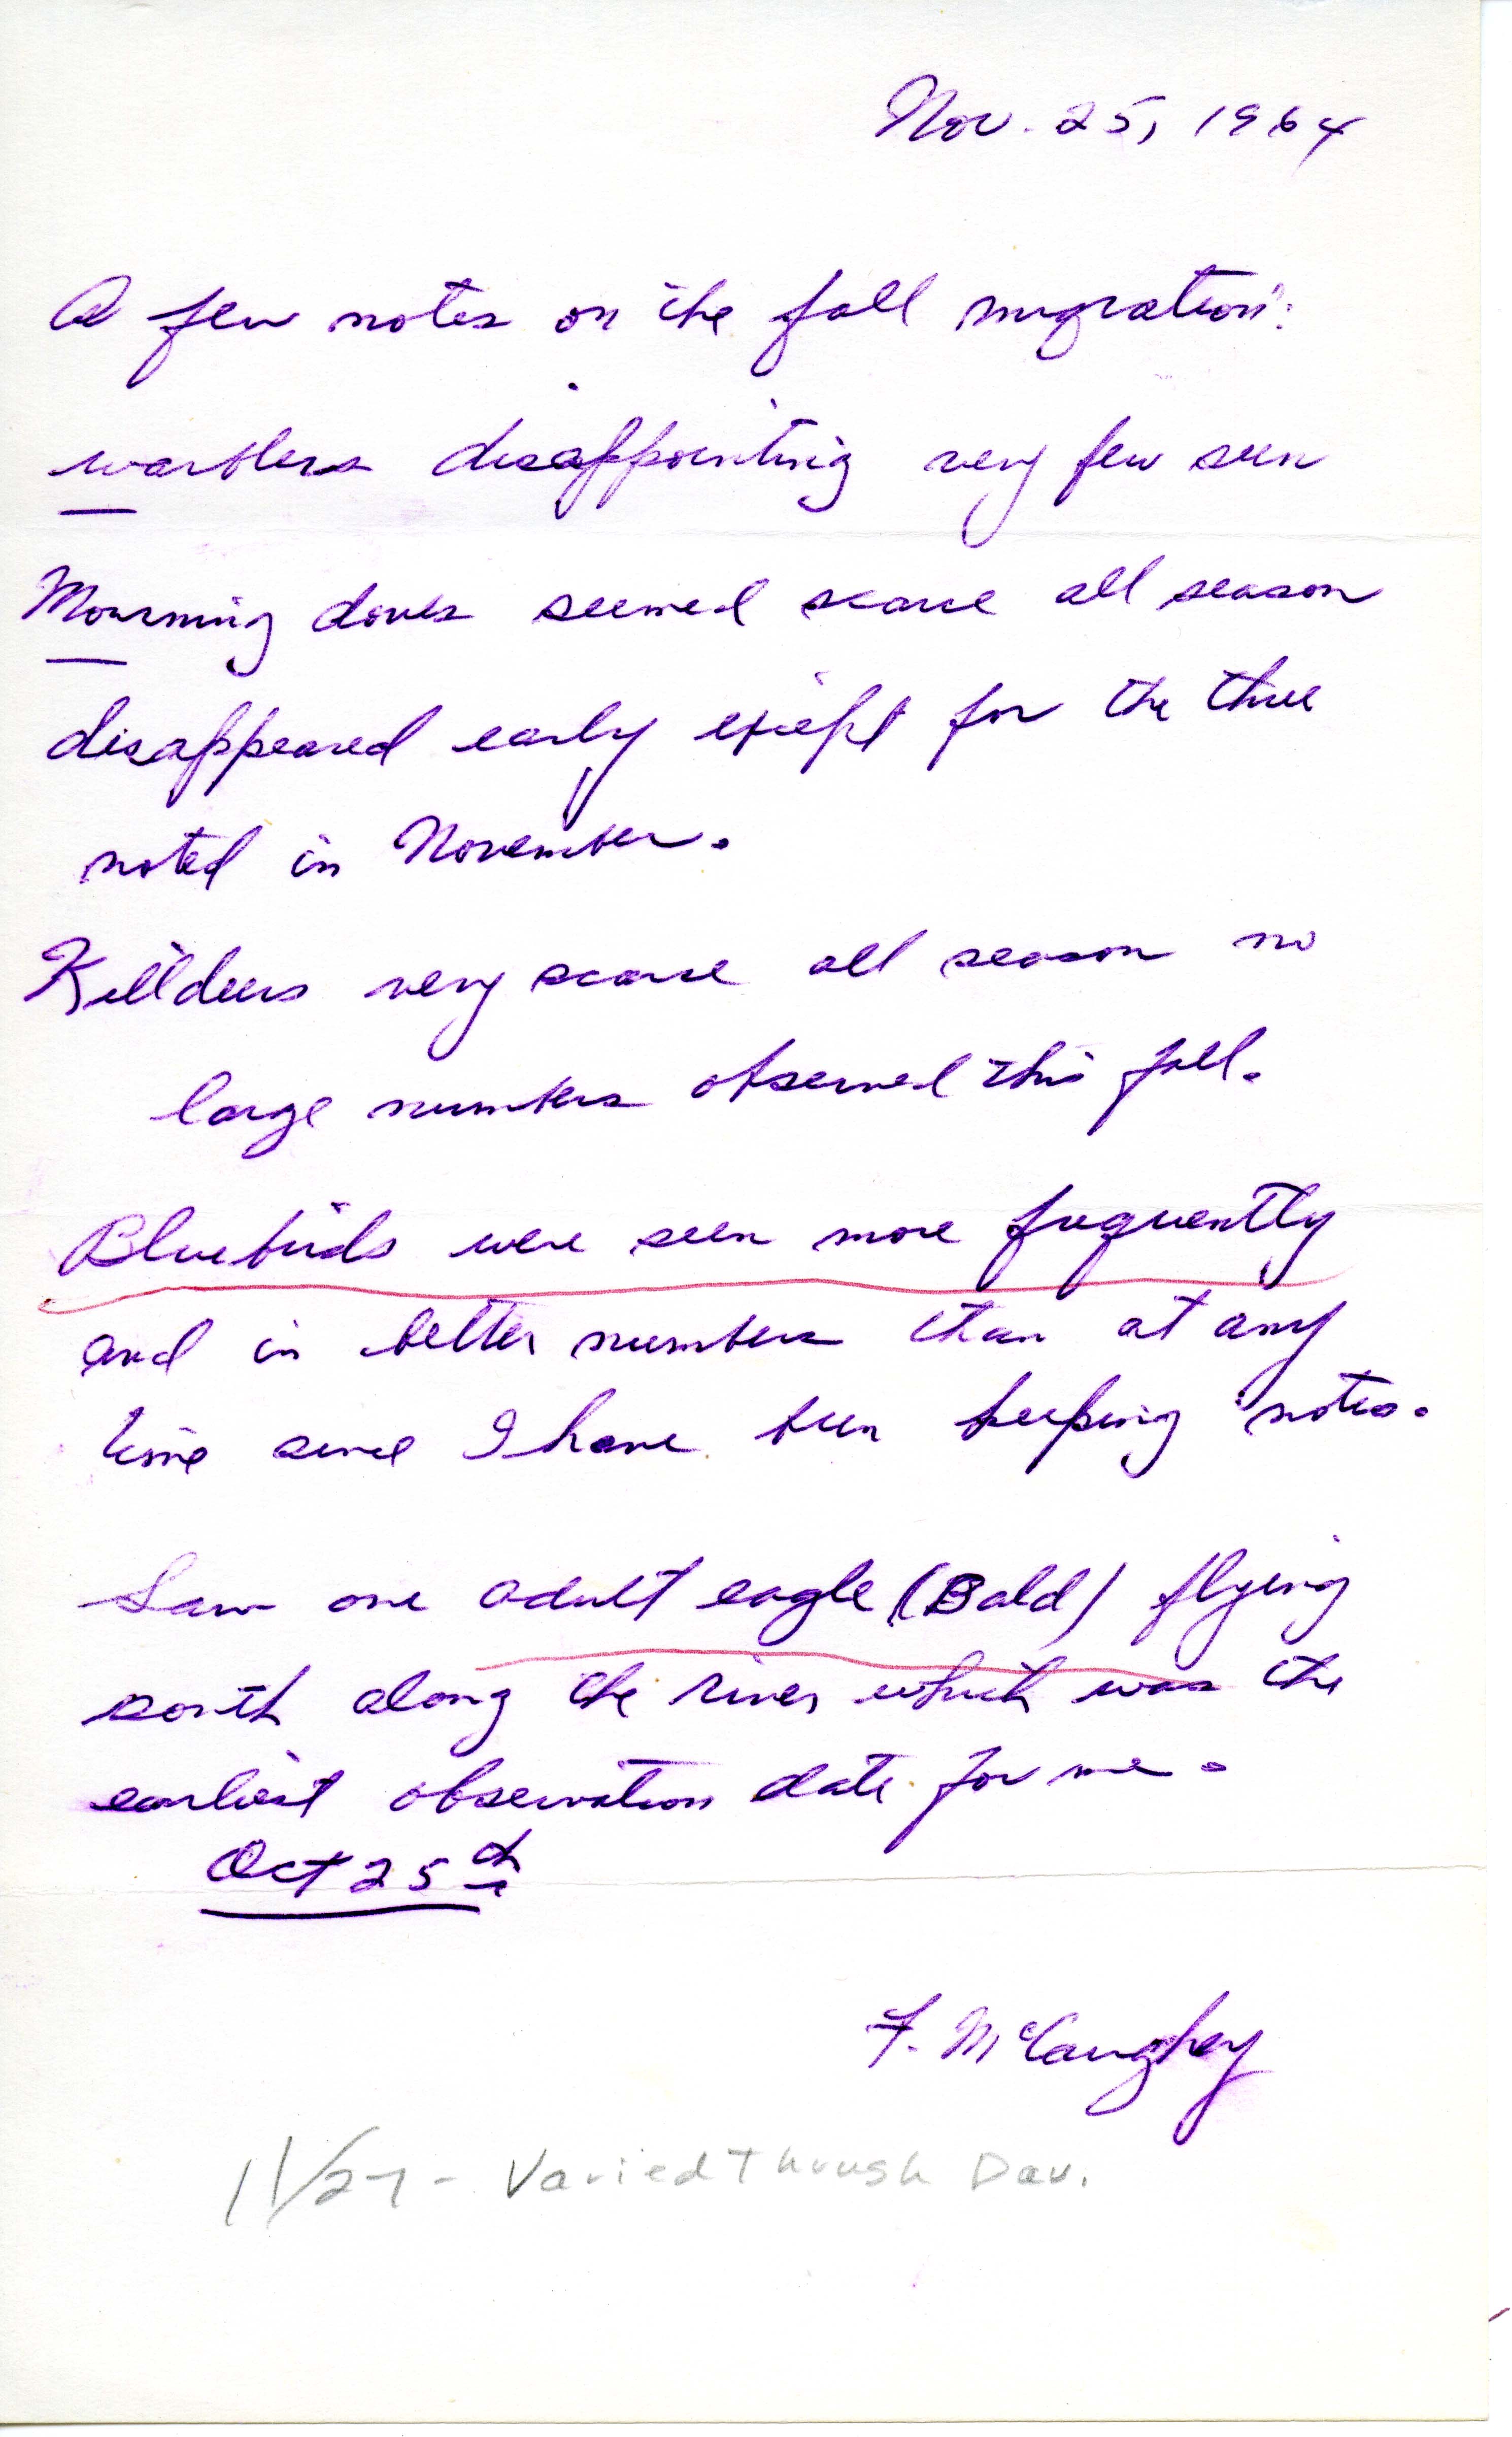 Florence McCaughey letter regarding fall bird migration, November 25, 1964